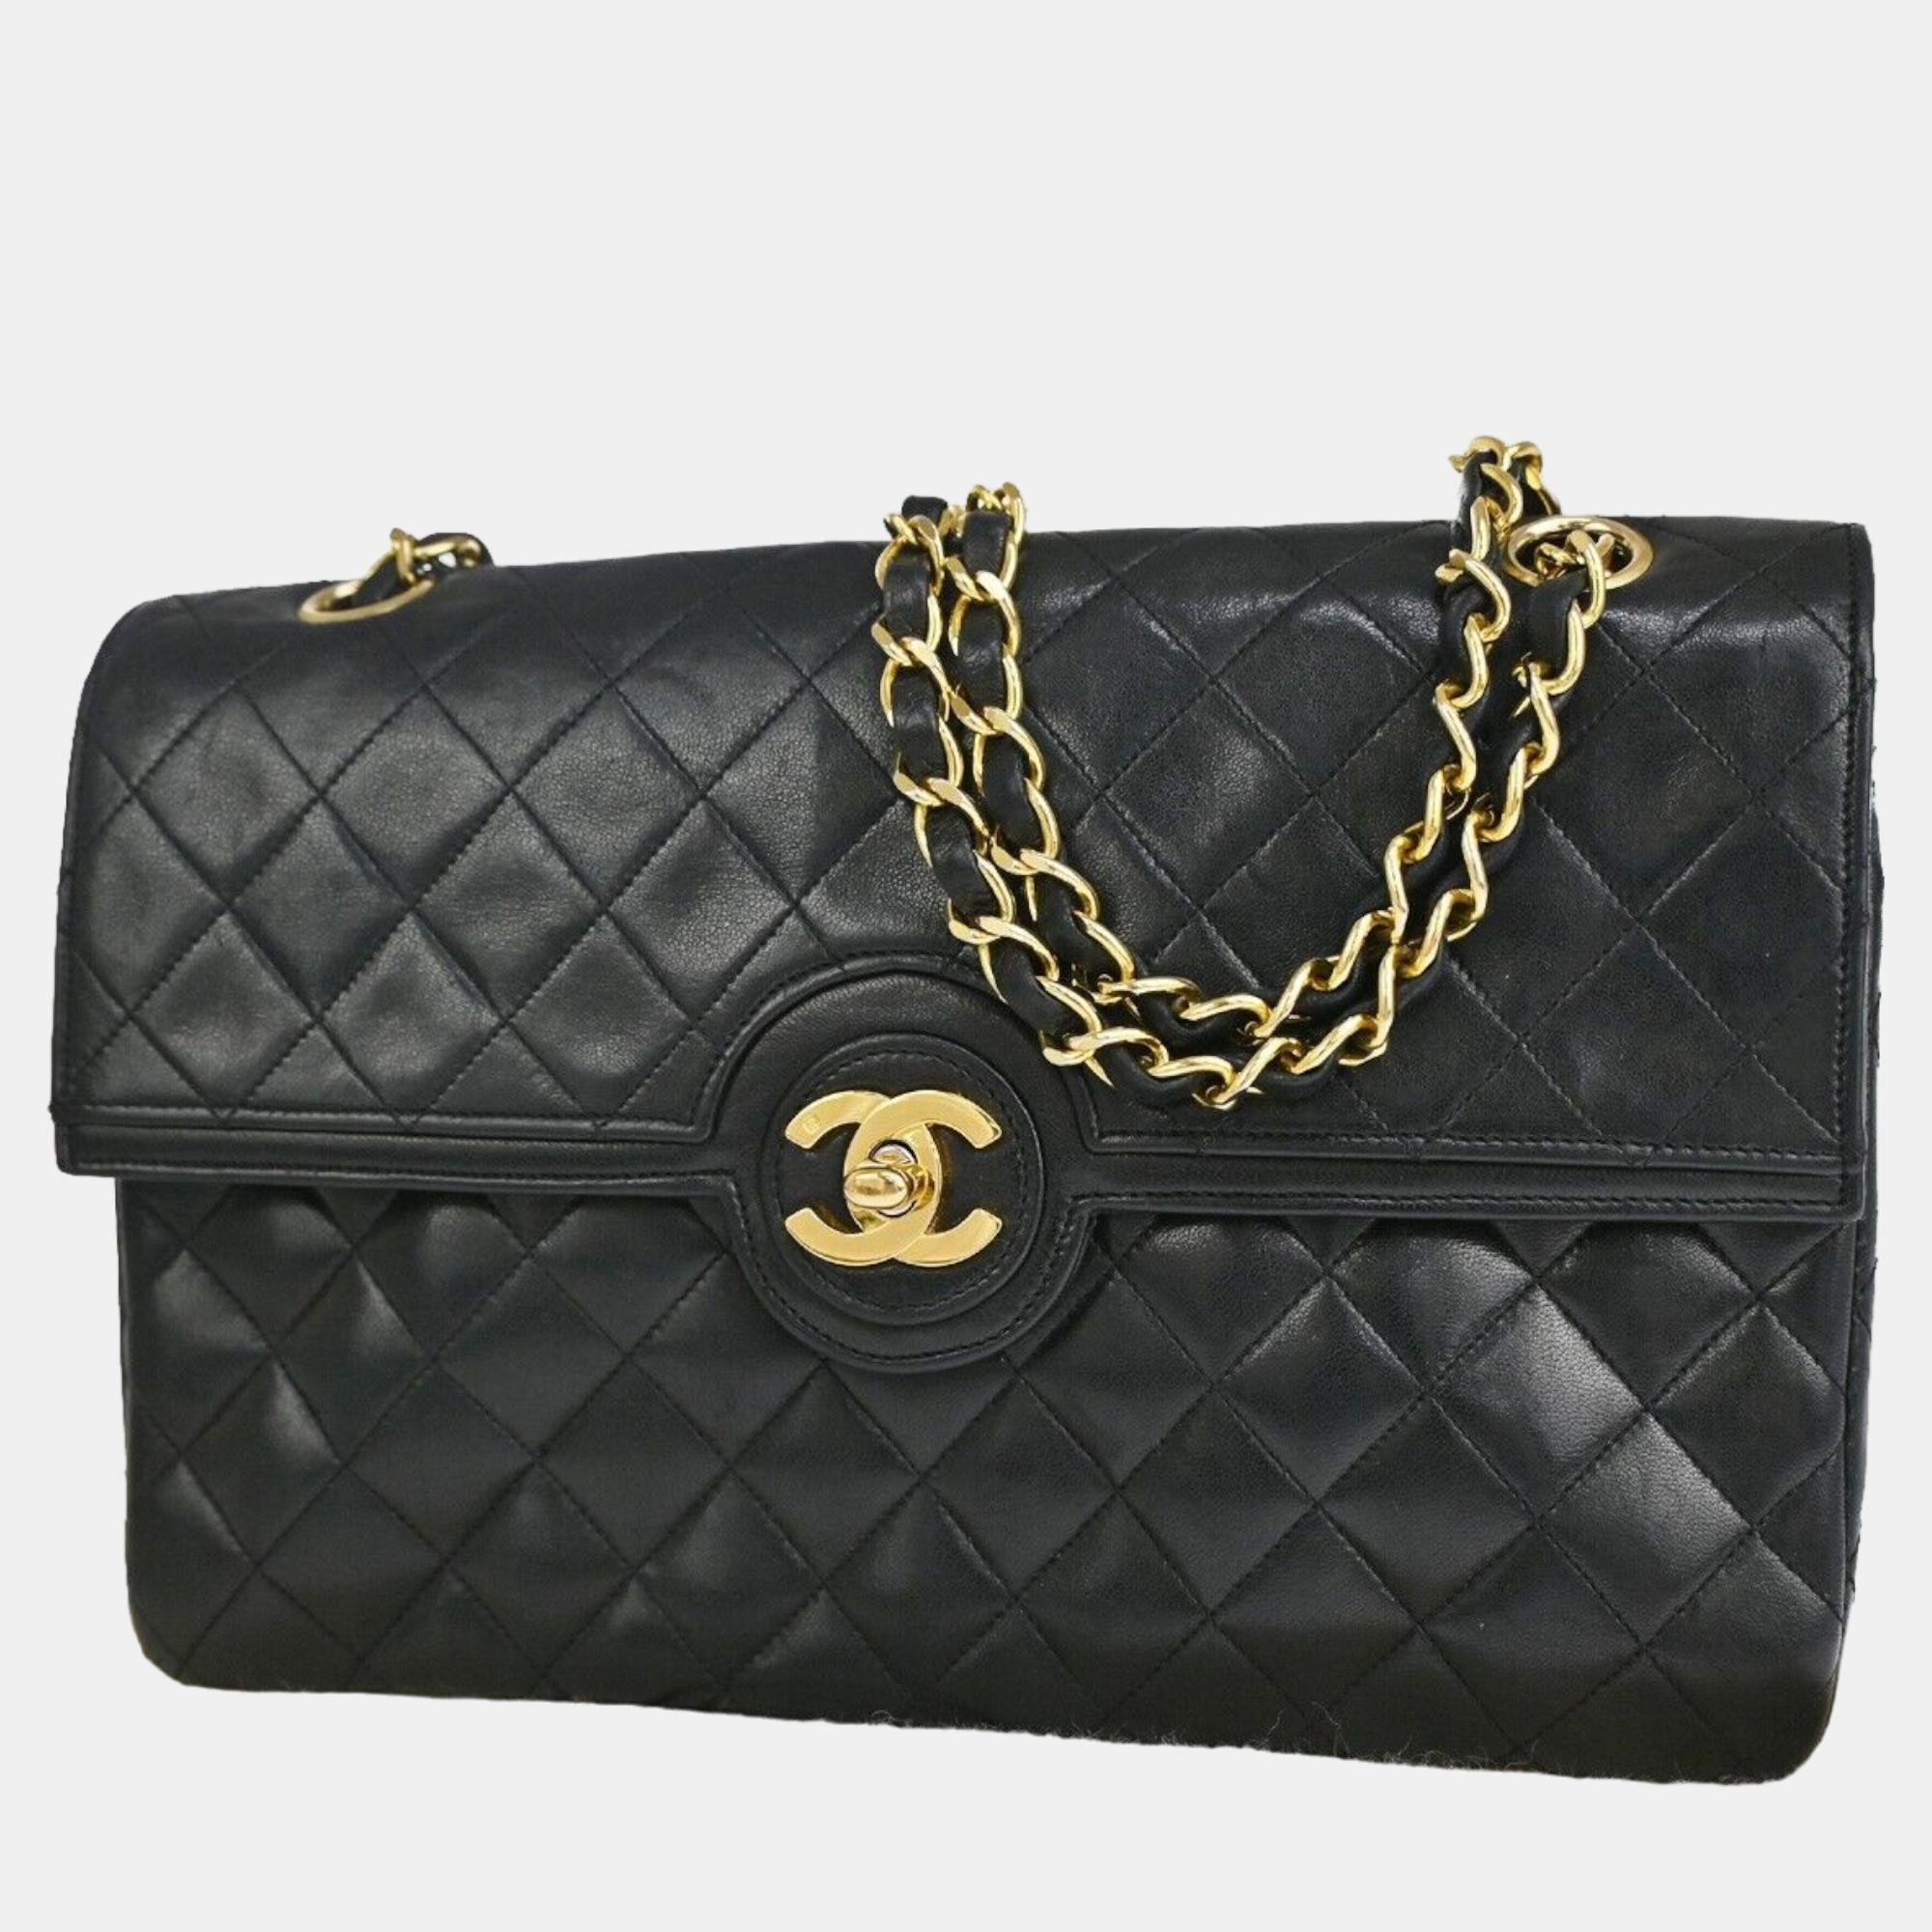 Chanel black leather classic flap shoulder bag